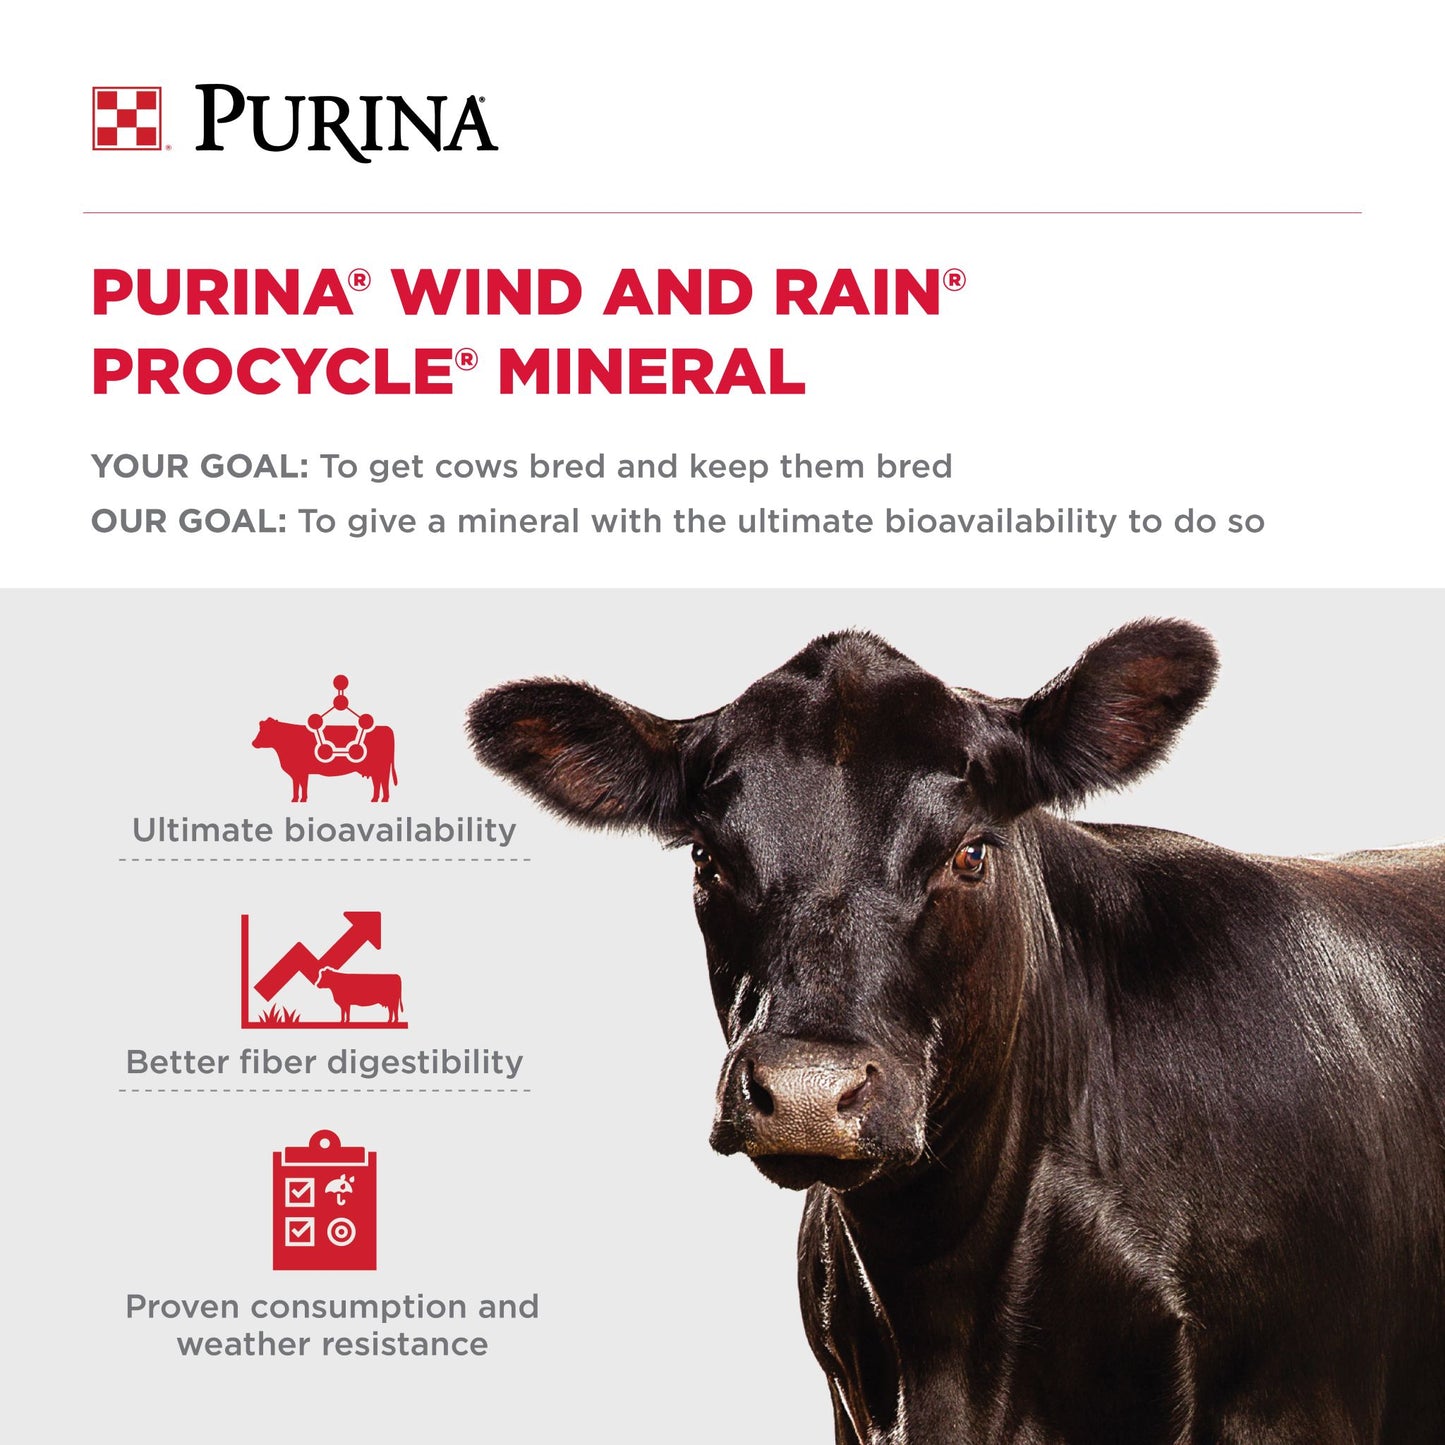 Purina Wind and Rain Procycle Mineral Benefits